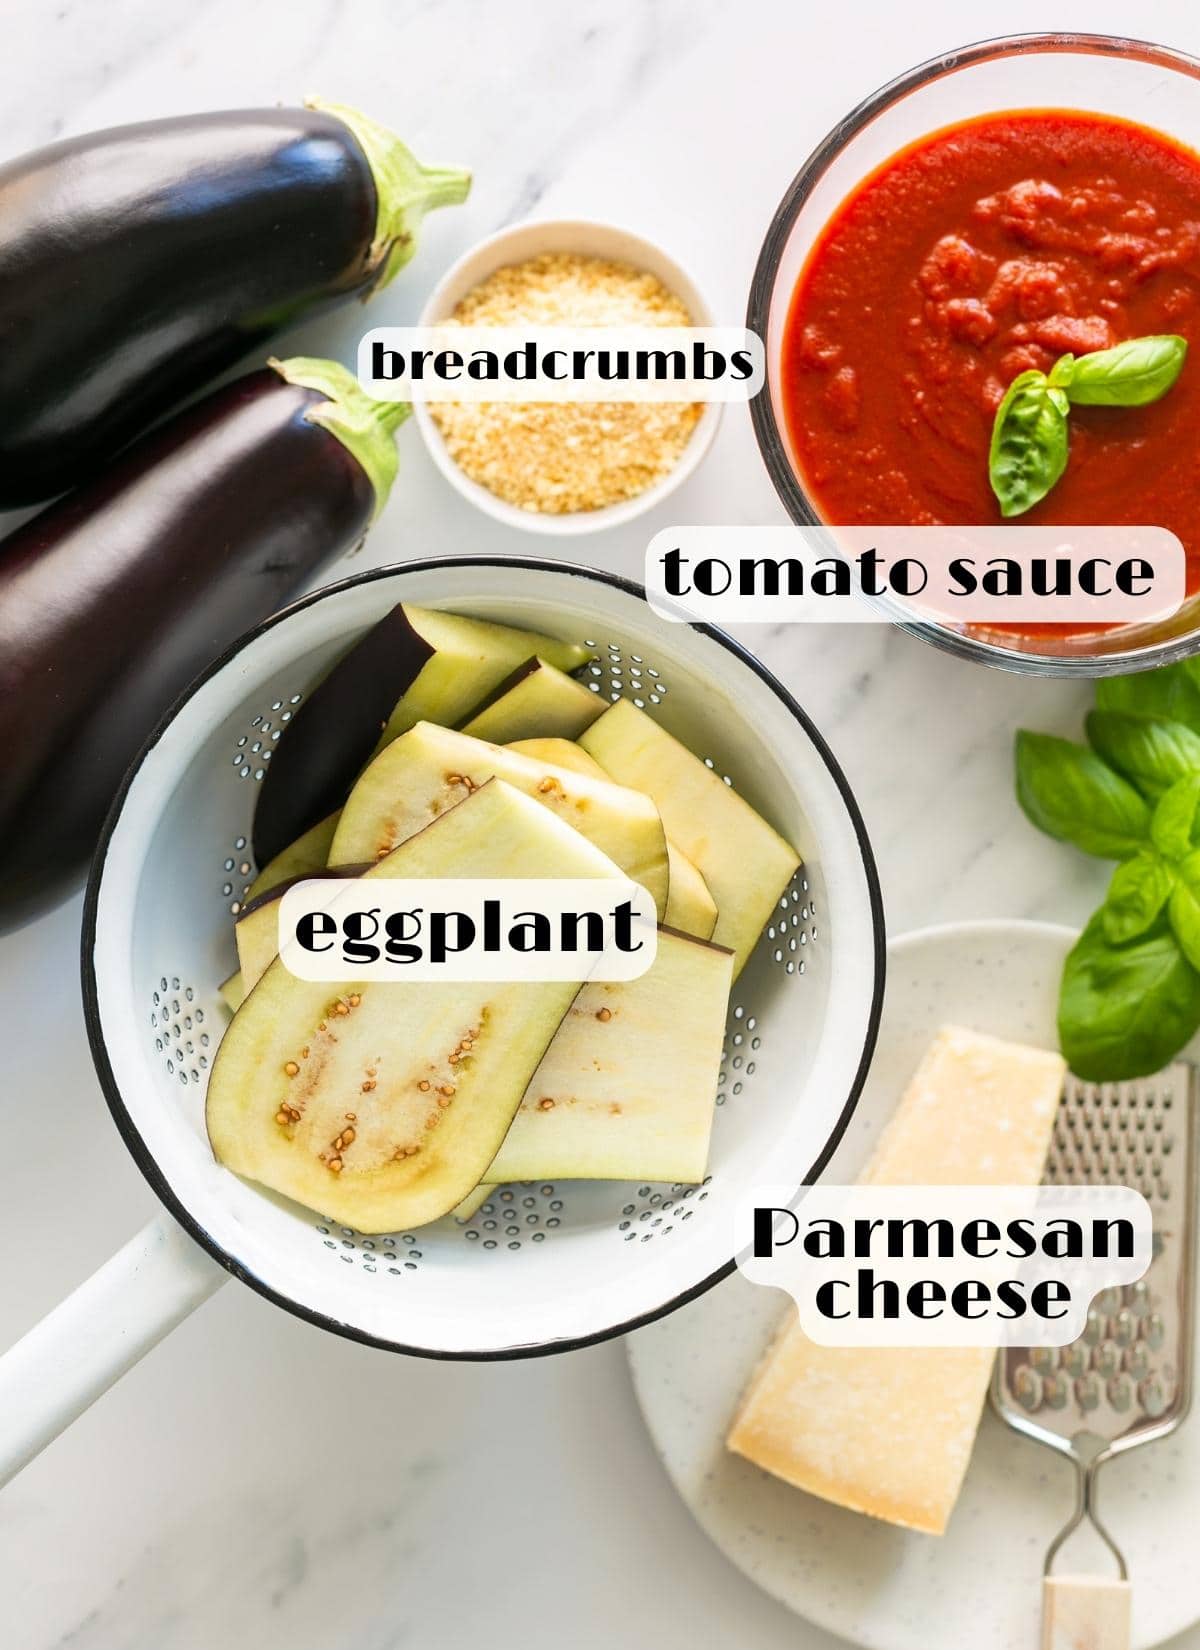 Parmigiana di melanzane ingredients: eggplant, tomato sauce, parmesan cheese, basil leaves, breadcrumbs.